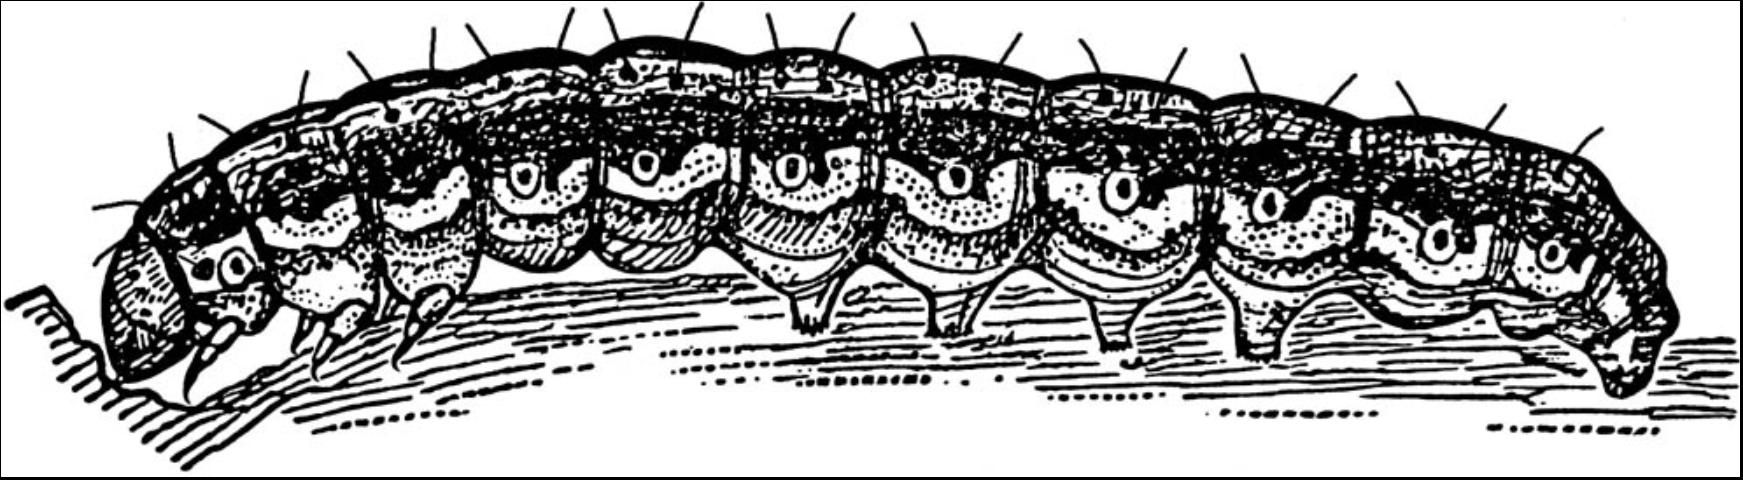 Figure 8. Corn earworm larva, Helicoverpa zea (Boddie).